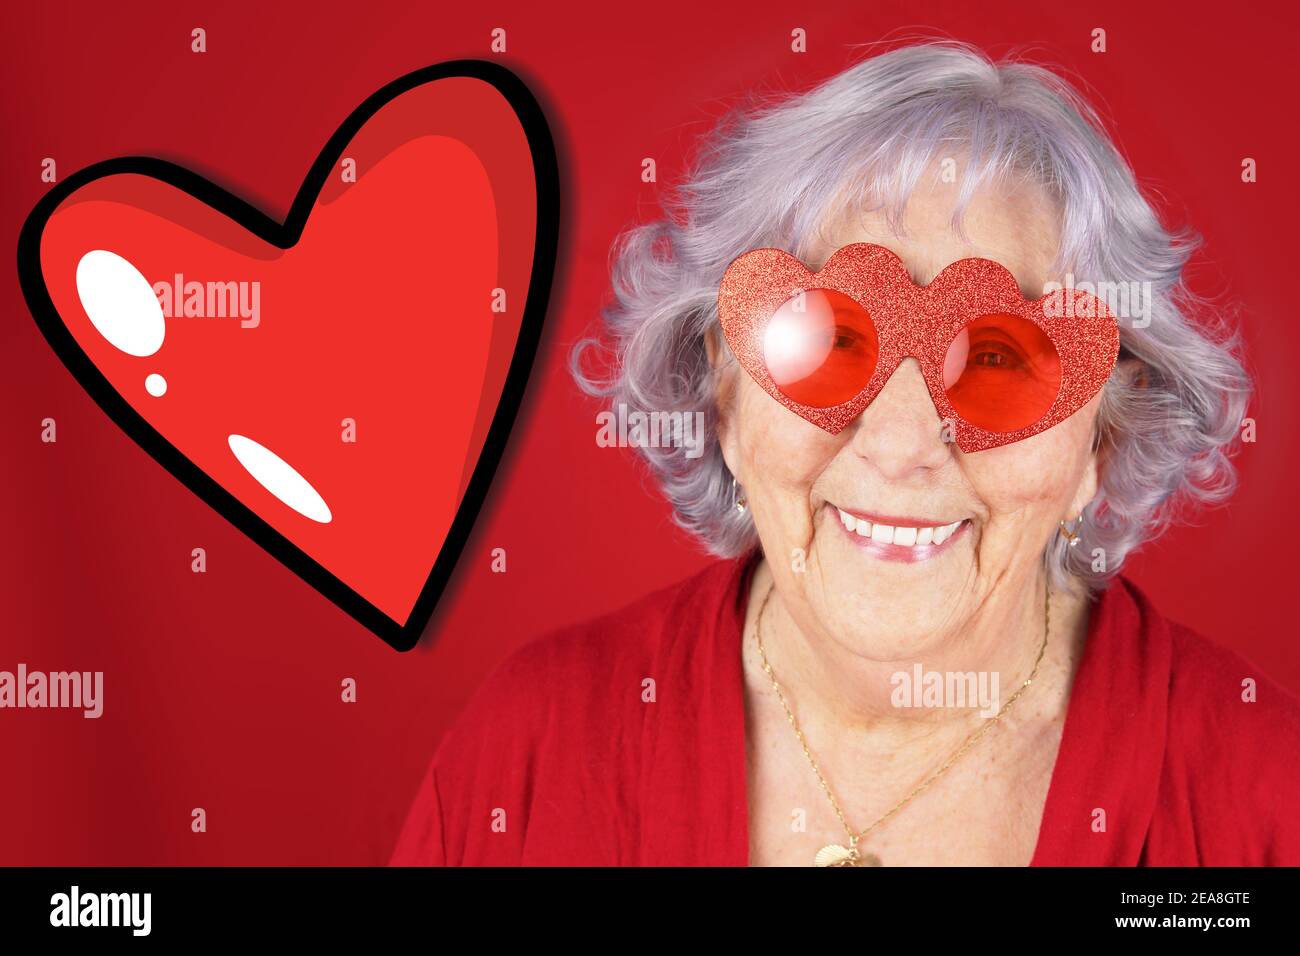 Comical grandma Valentine's day card with cartoon illustration art Stock Photo